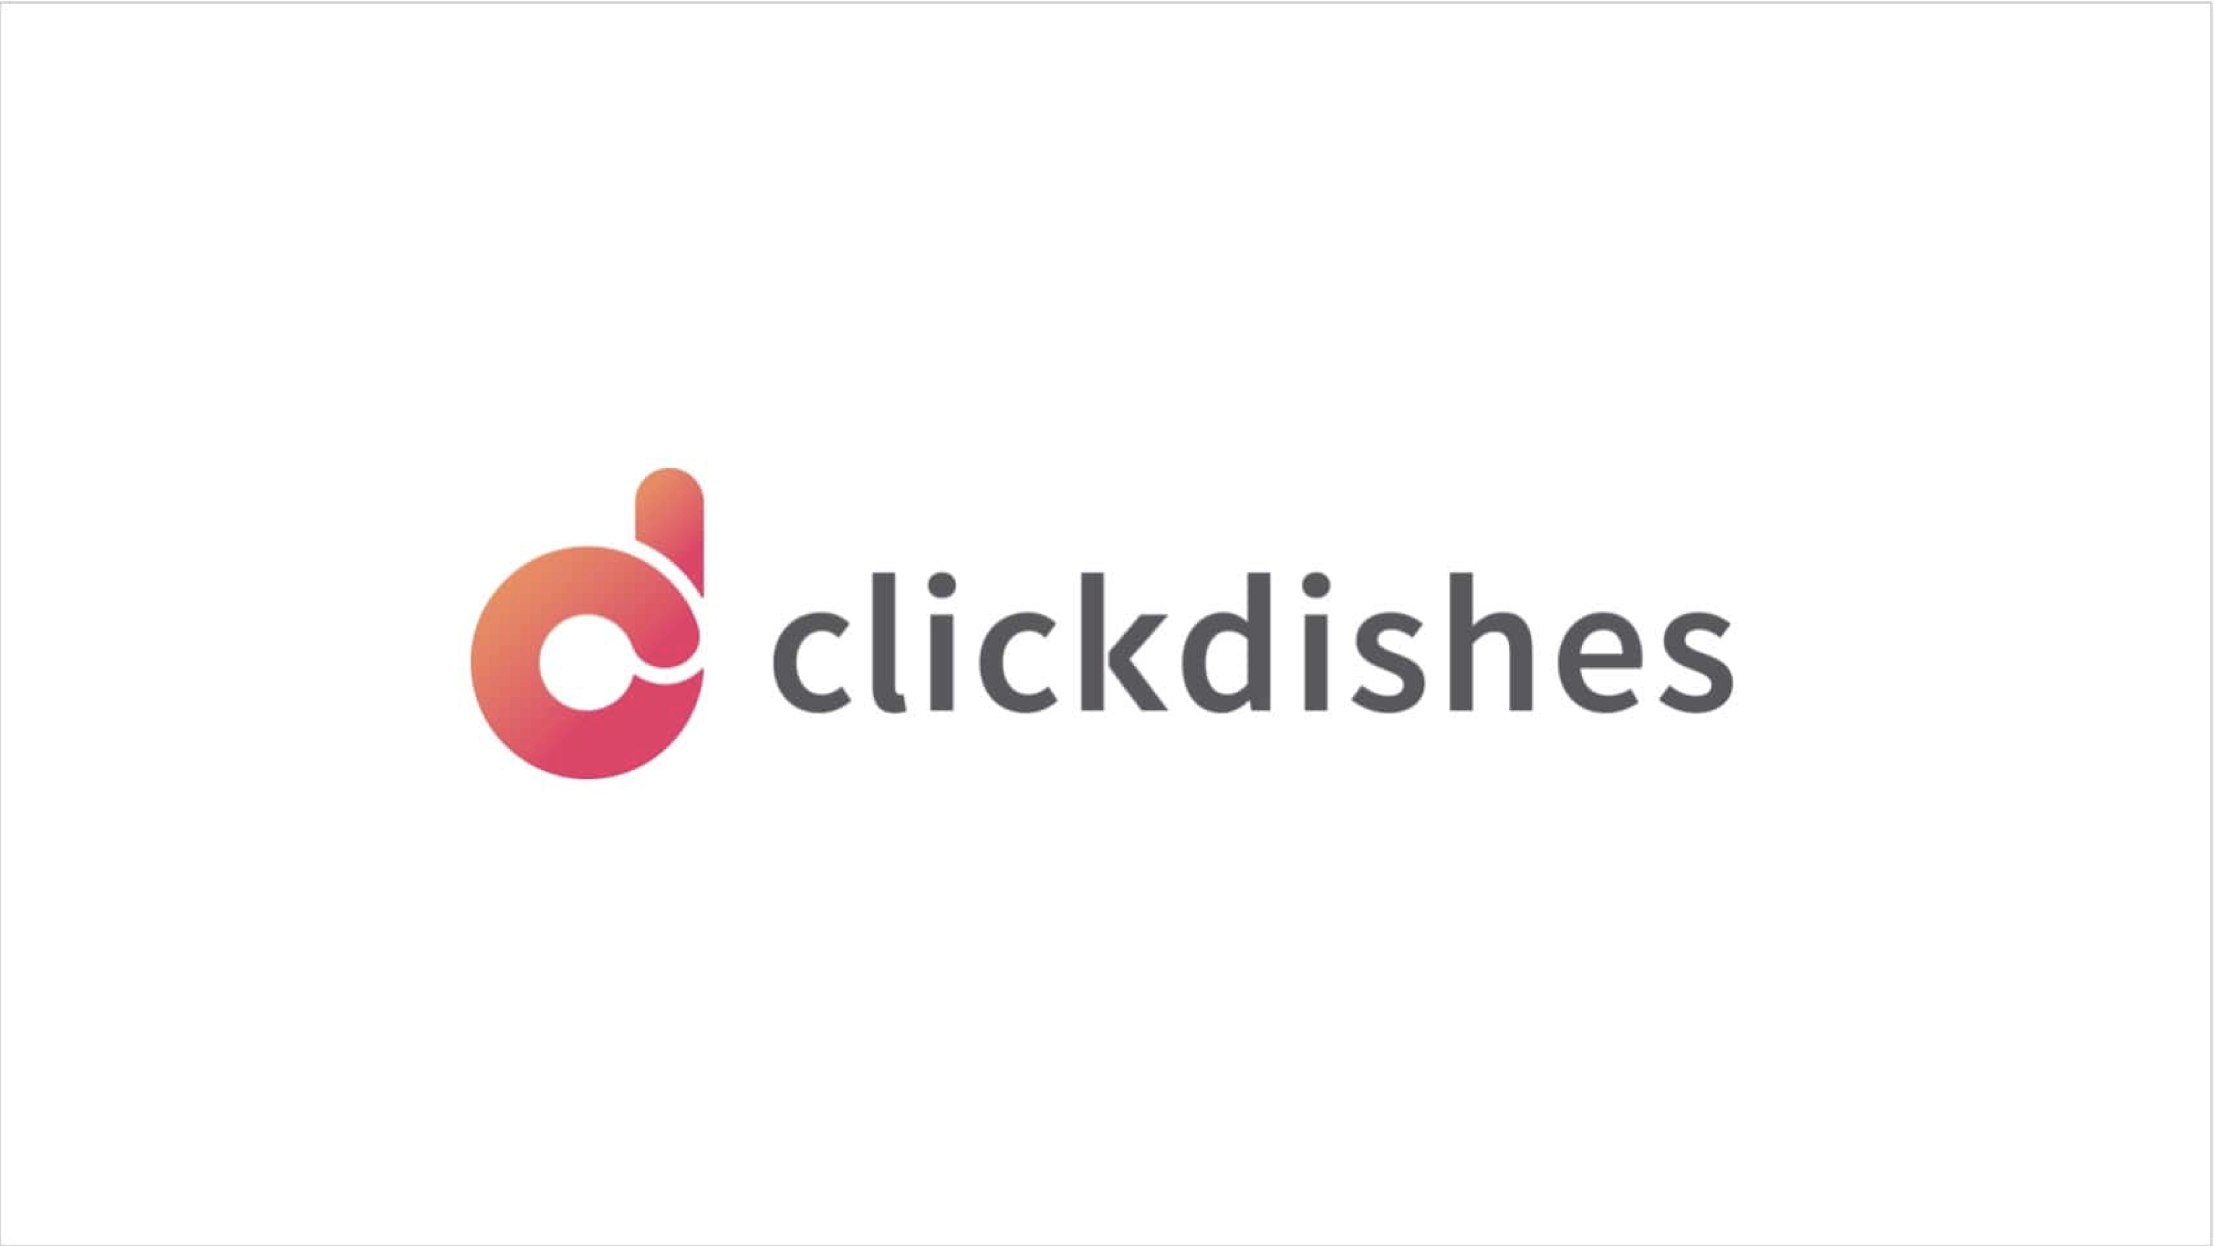 ClickDishes(クリックディッシュ)の評判